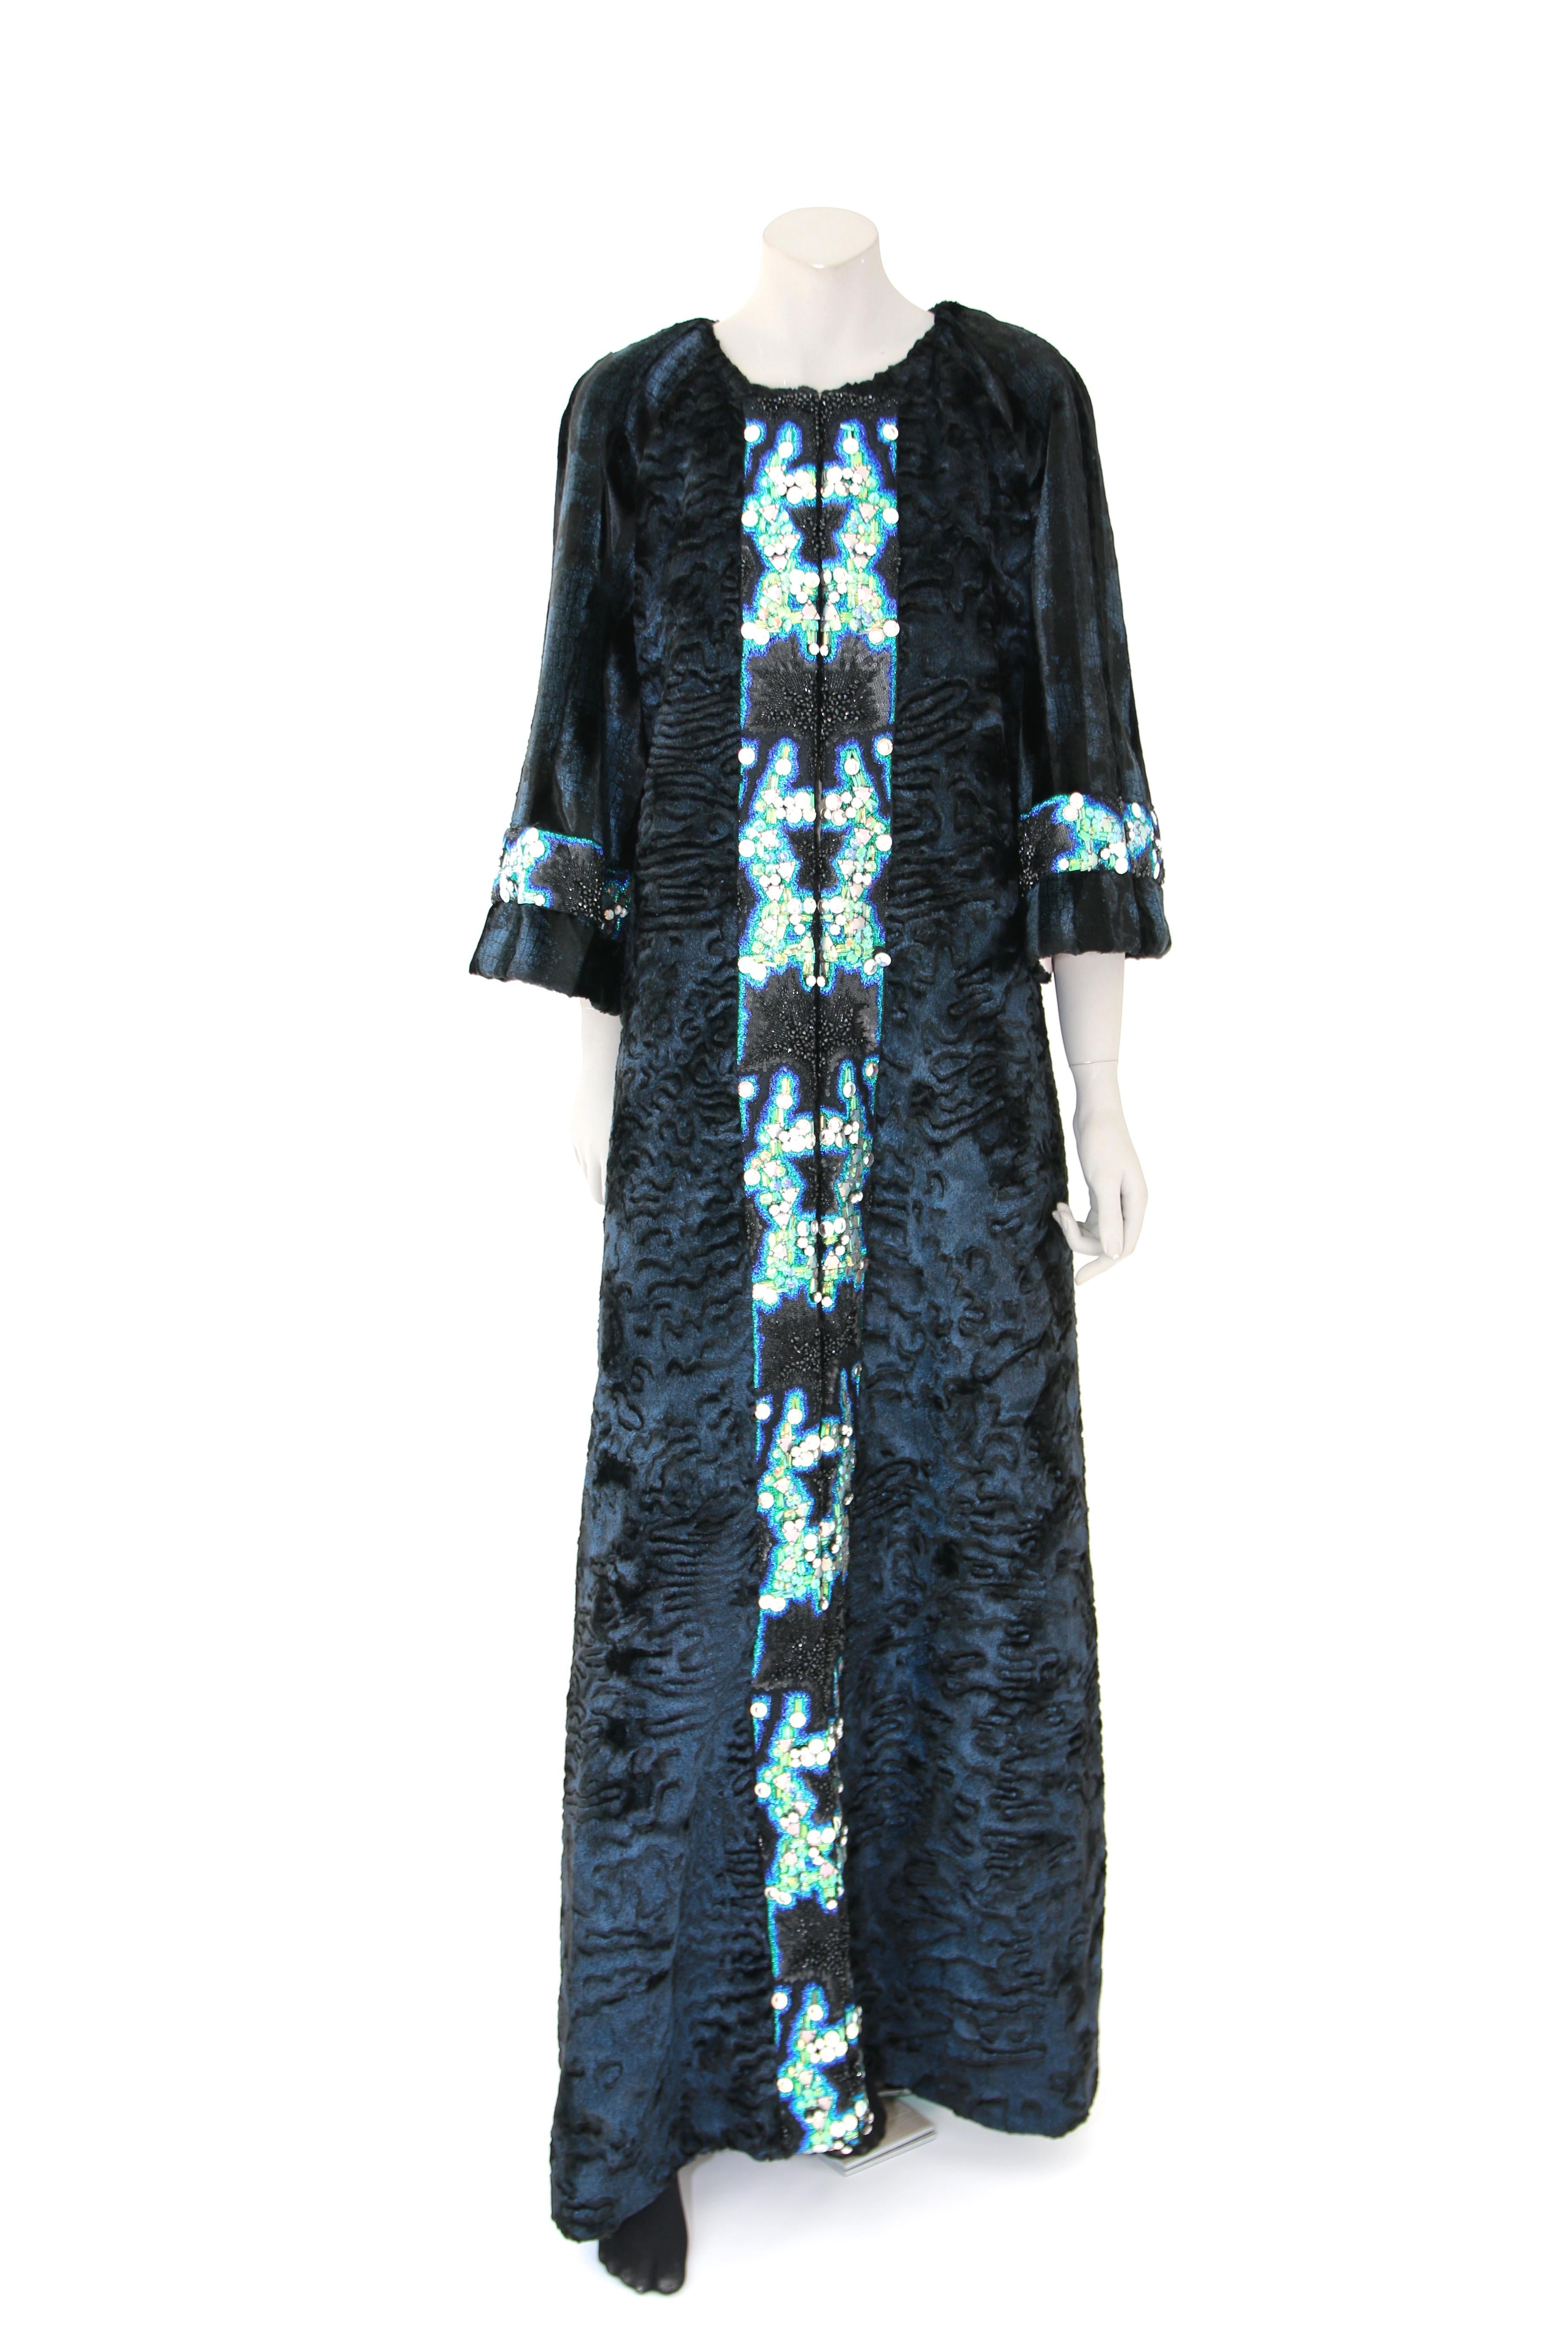 Pelush Blue Faux Fur Astrakhan Caftan Coat W/Embroidery And Detachable Hood - S For Sale 3